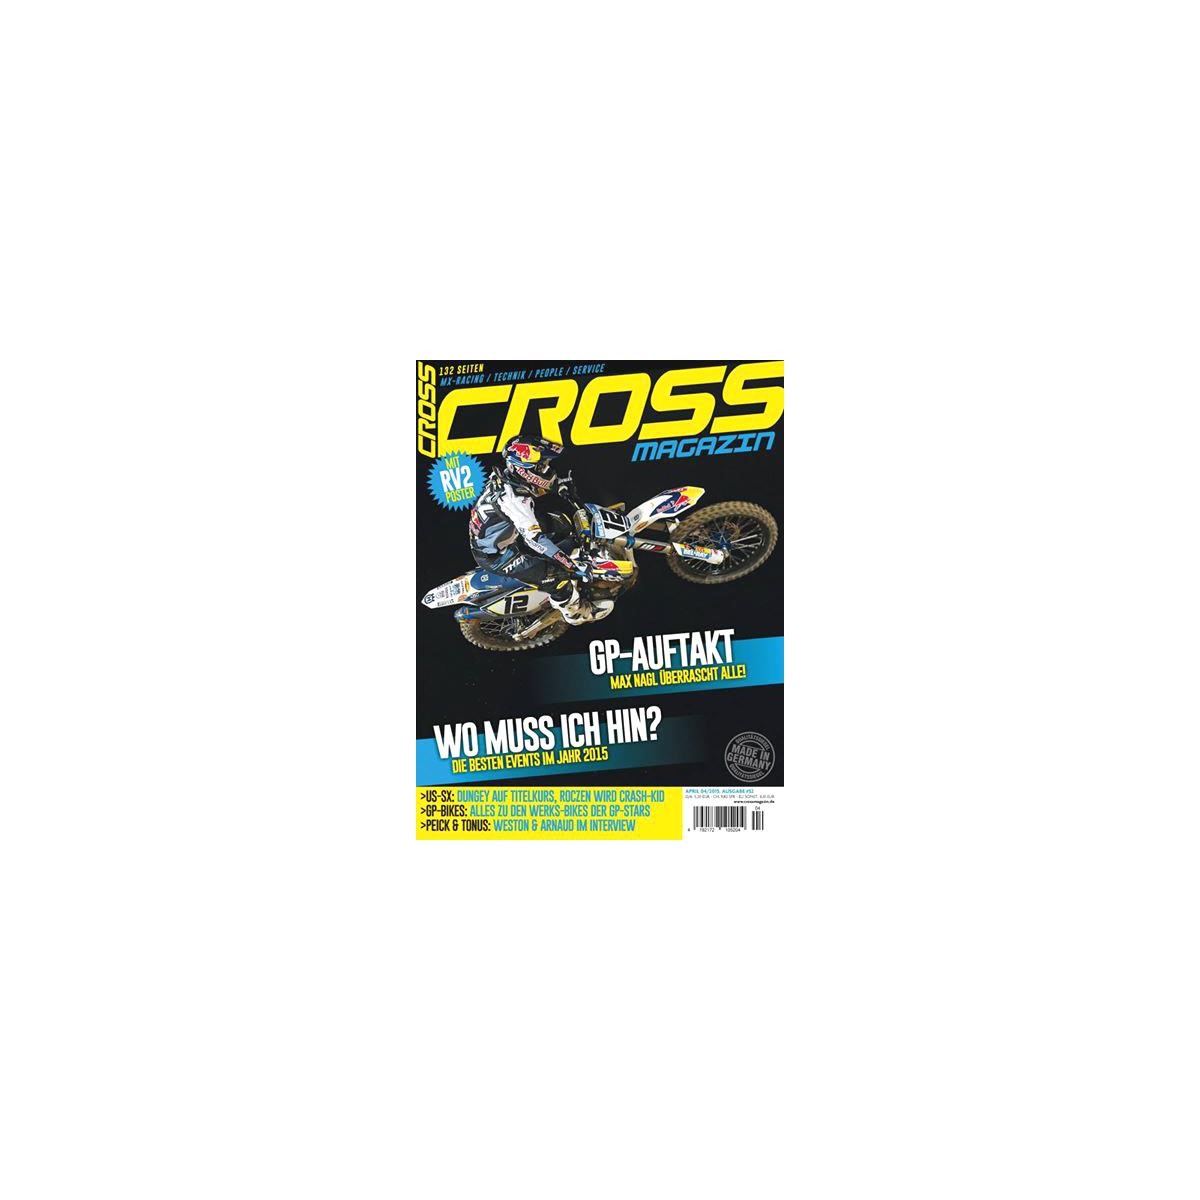 Cross Magazin Cross Magazin Issue 04/2015